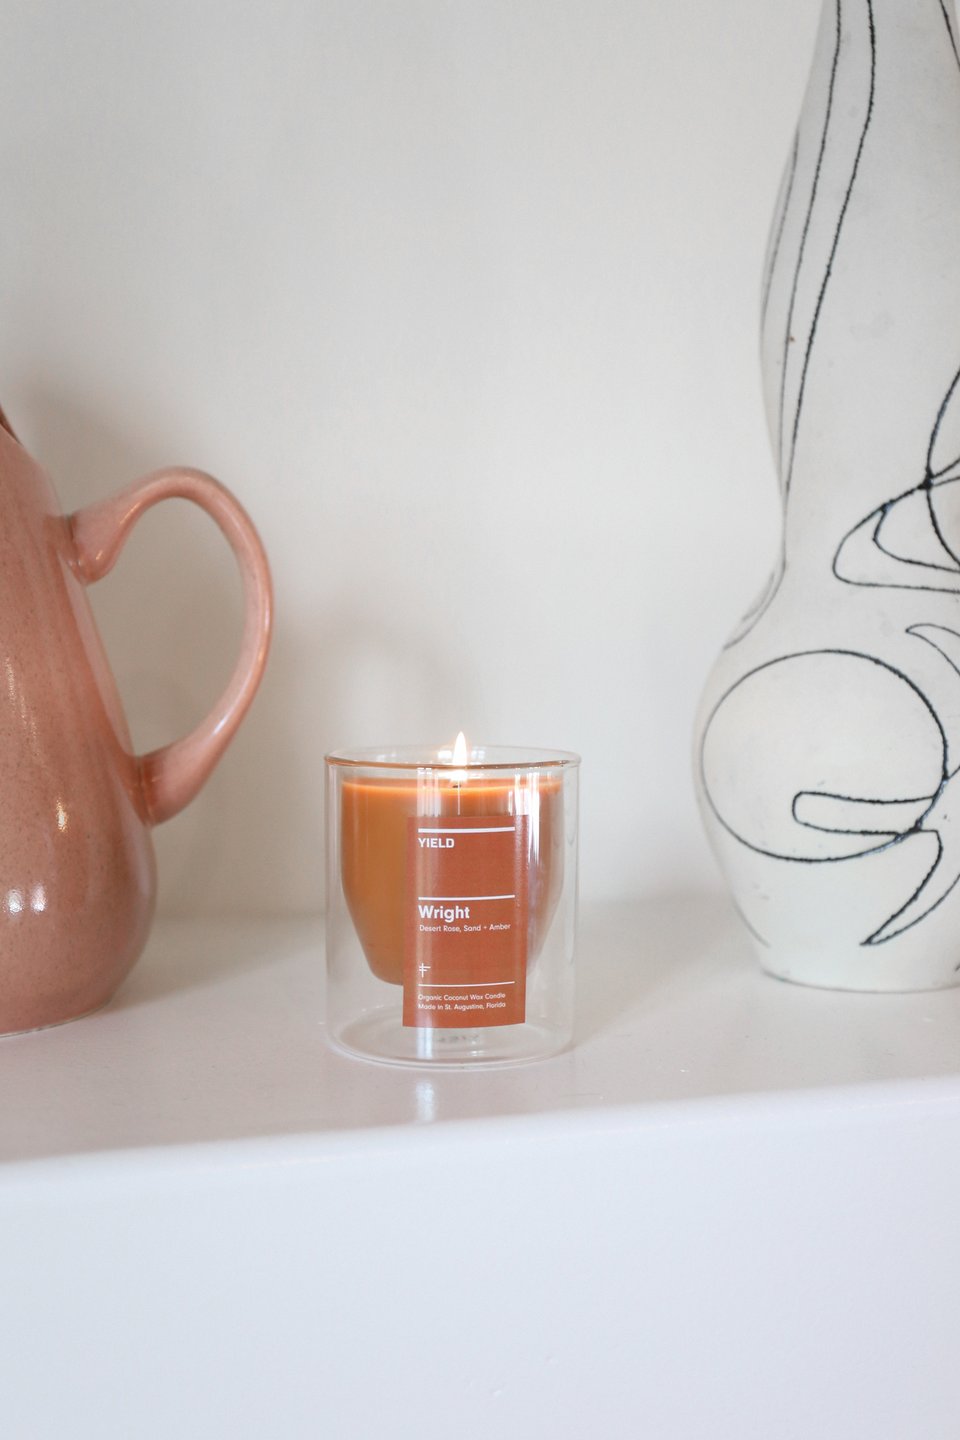 Wright - Desert Rose, Sand + Amber Artisinal Candle